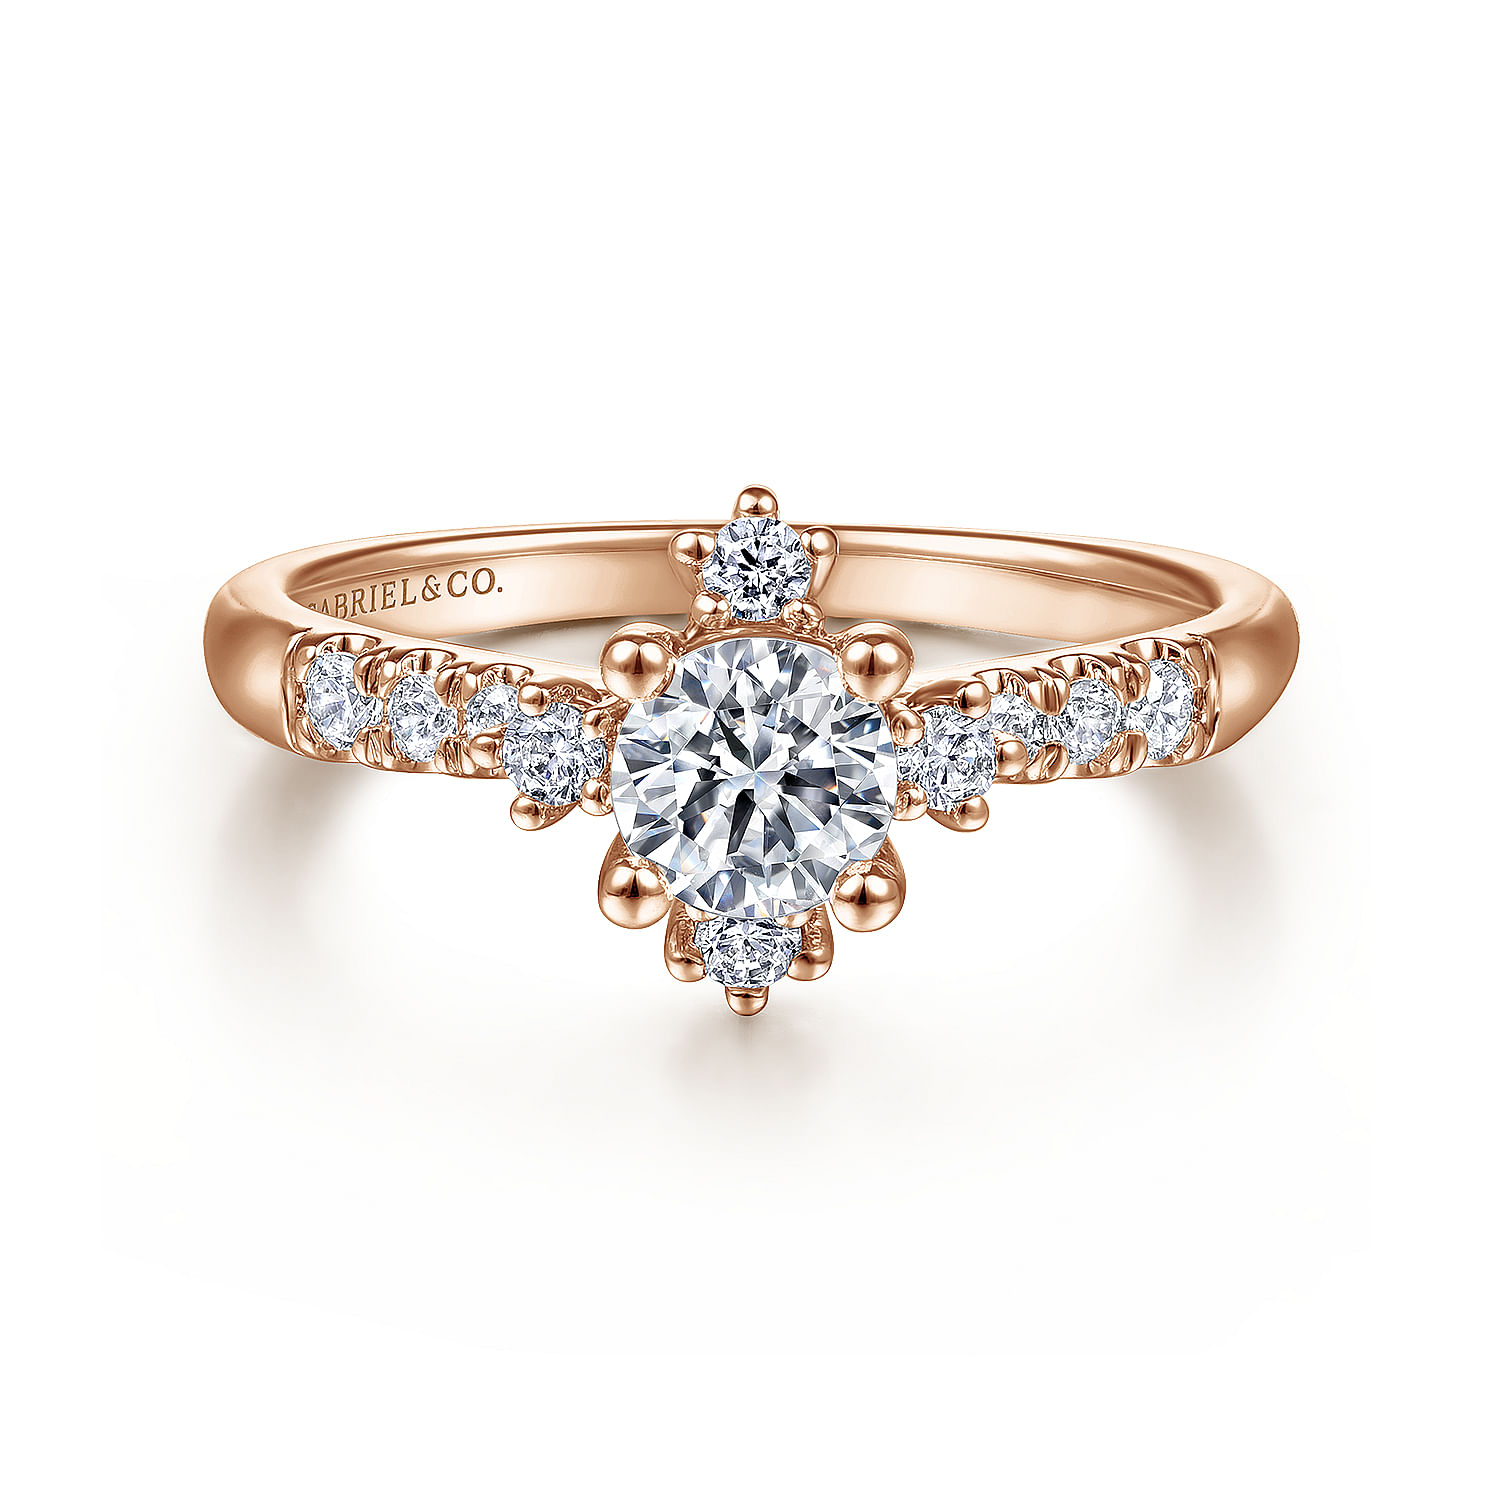 Glinda - Unique 14K Rose Gold Halo Diamond Engagement Ring